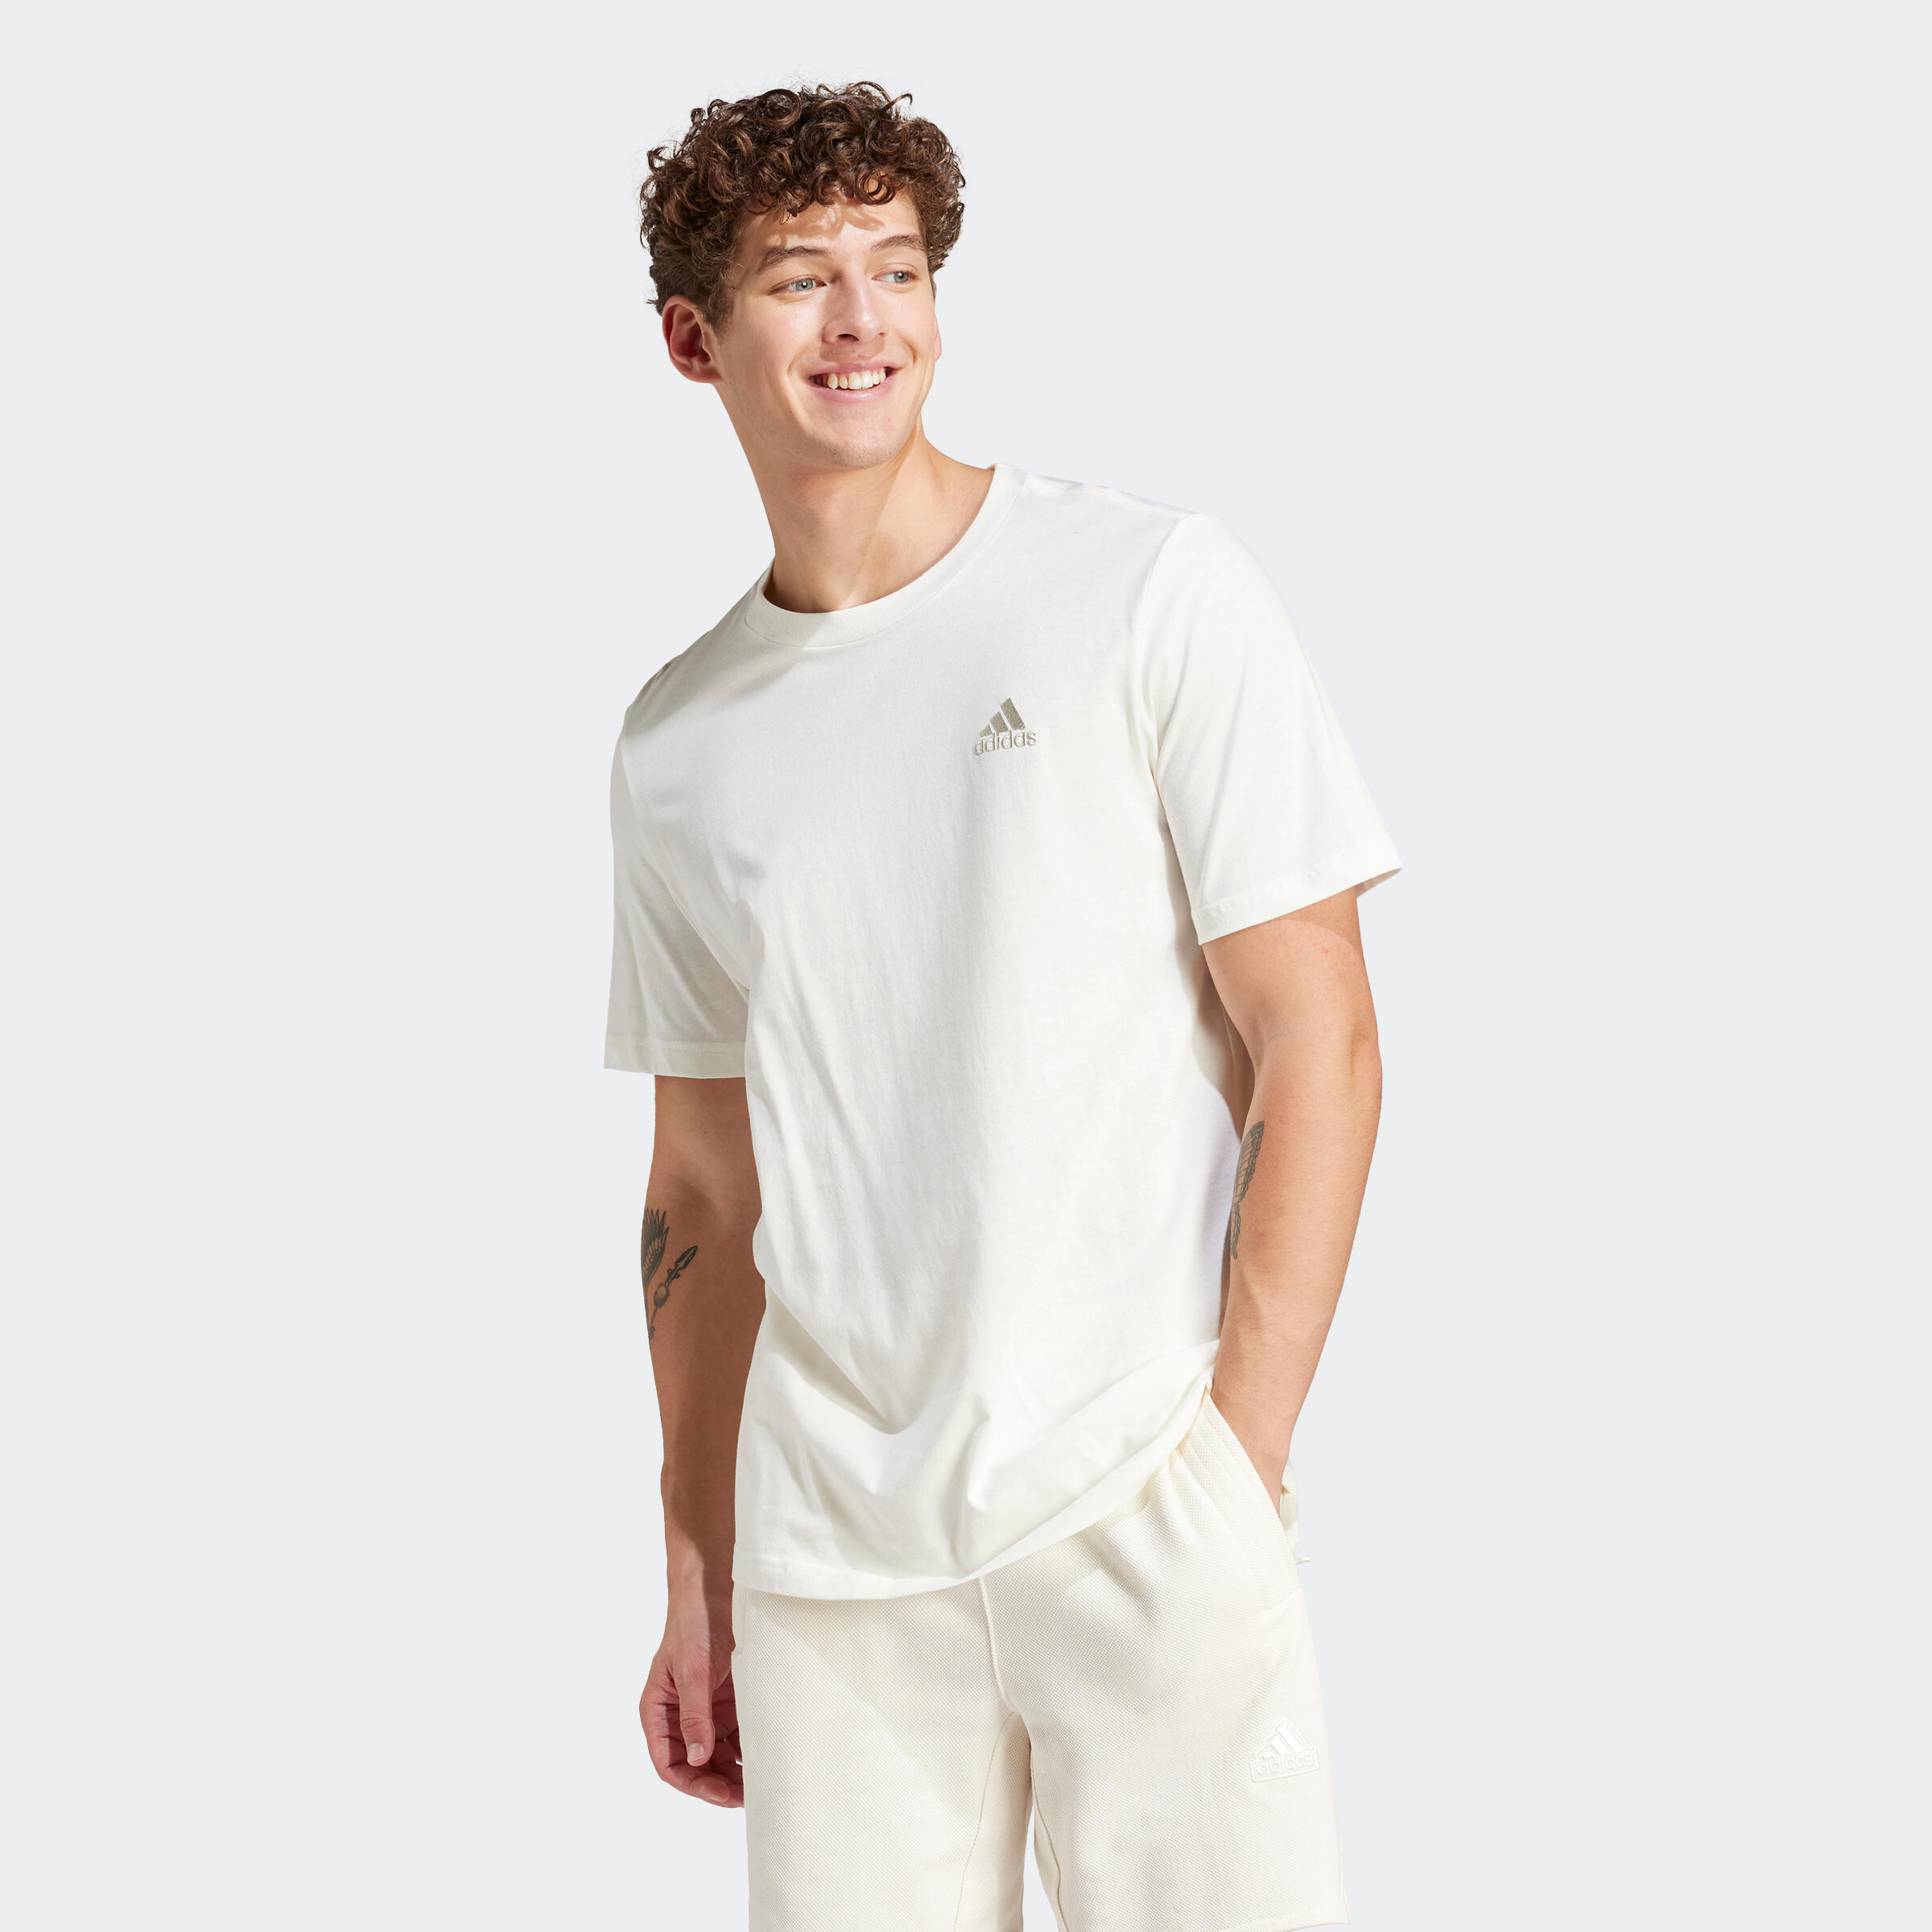 ADIDAS T-Shirt De Fitness Soft Training Adidas Homme Off White -